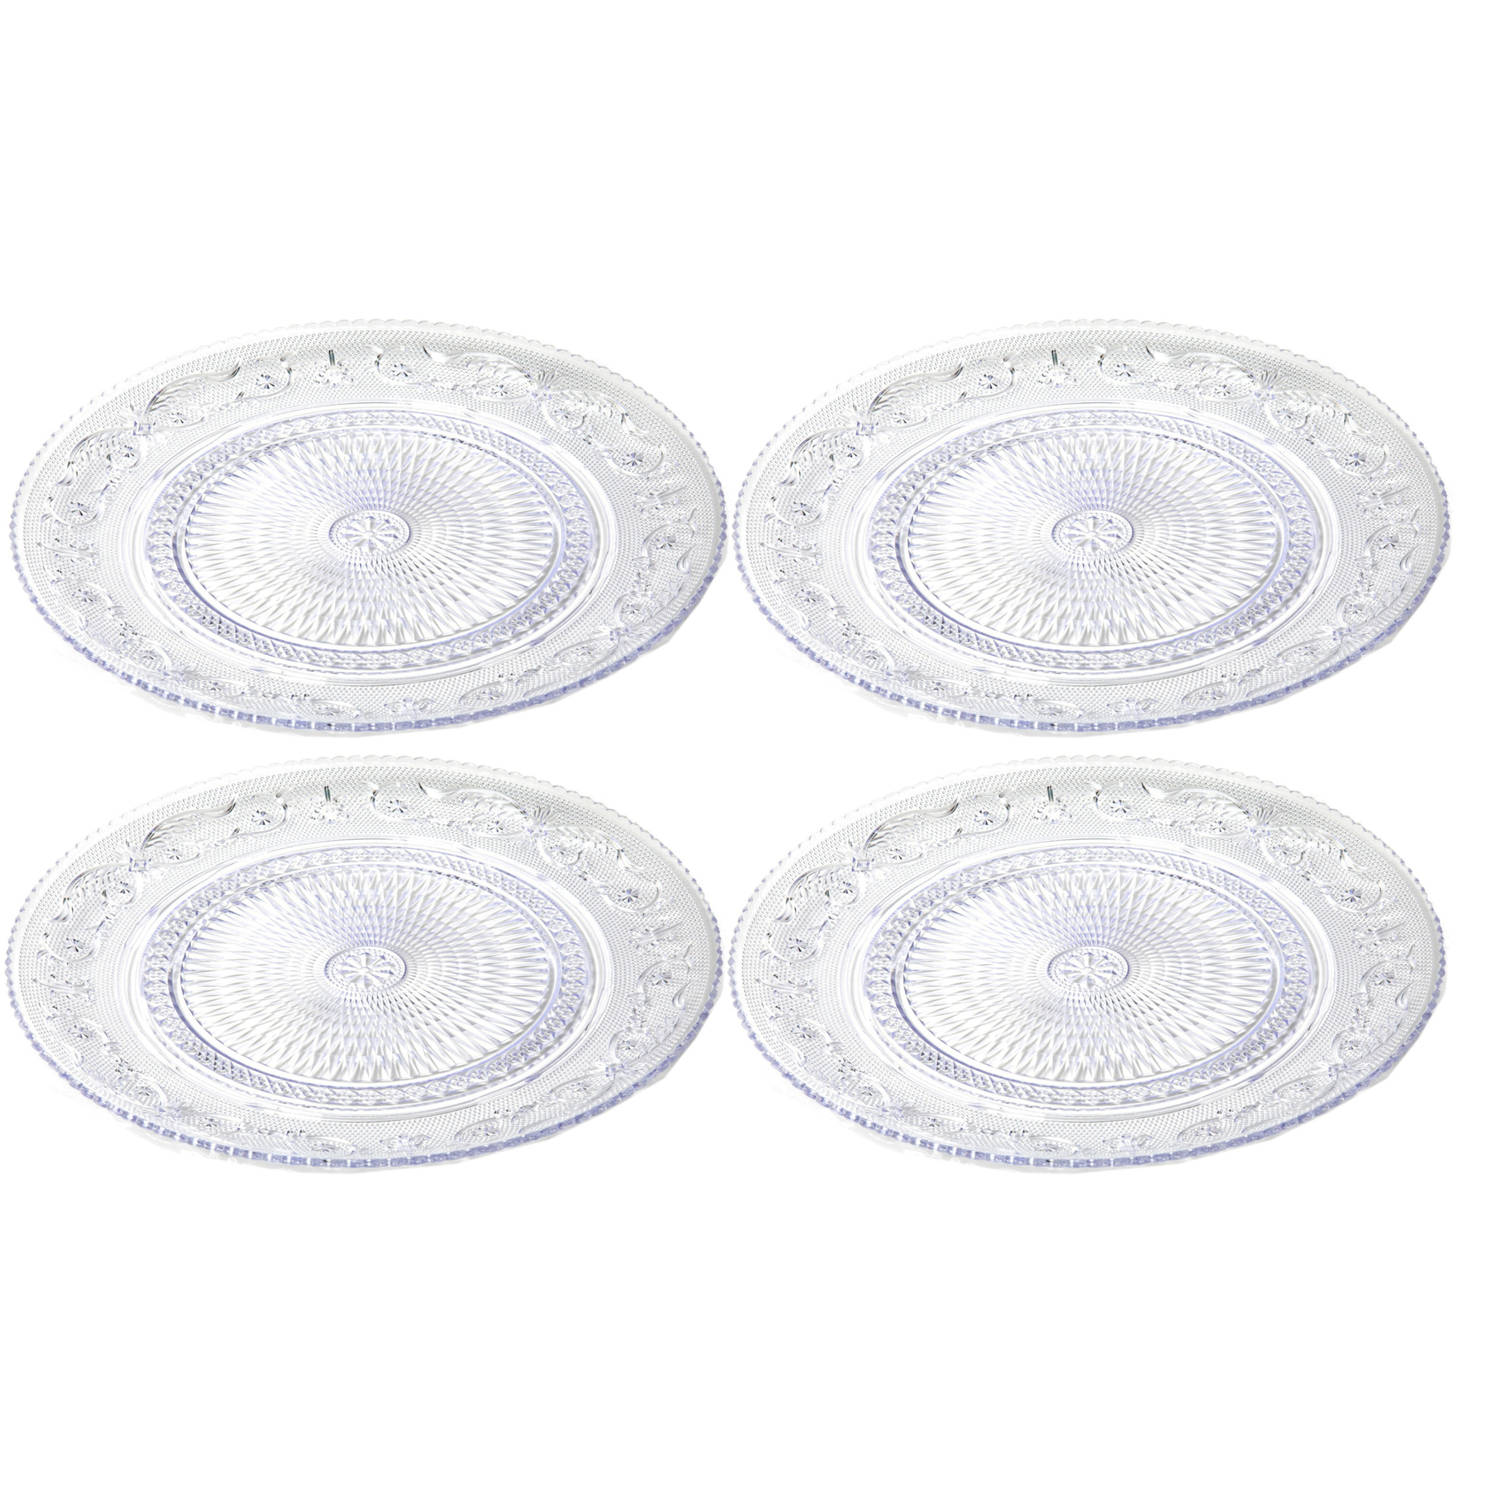 Plasticforte Onbreekbare Ontbijt/gebakbordjes - 6x - kunststof - kristal stijl - transparant - 18 cm - Campingborden